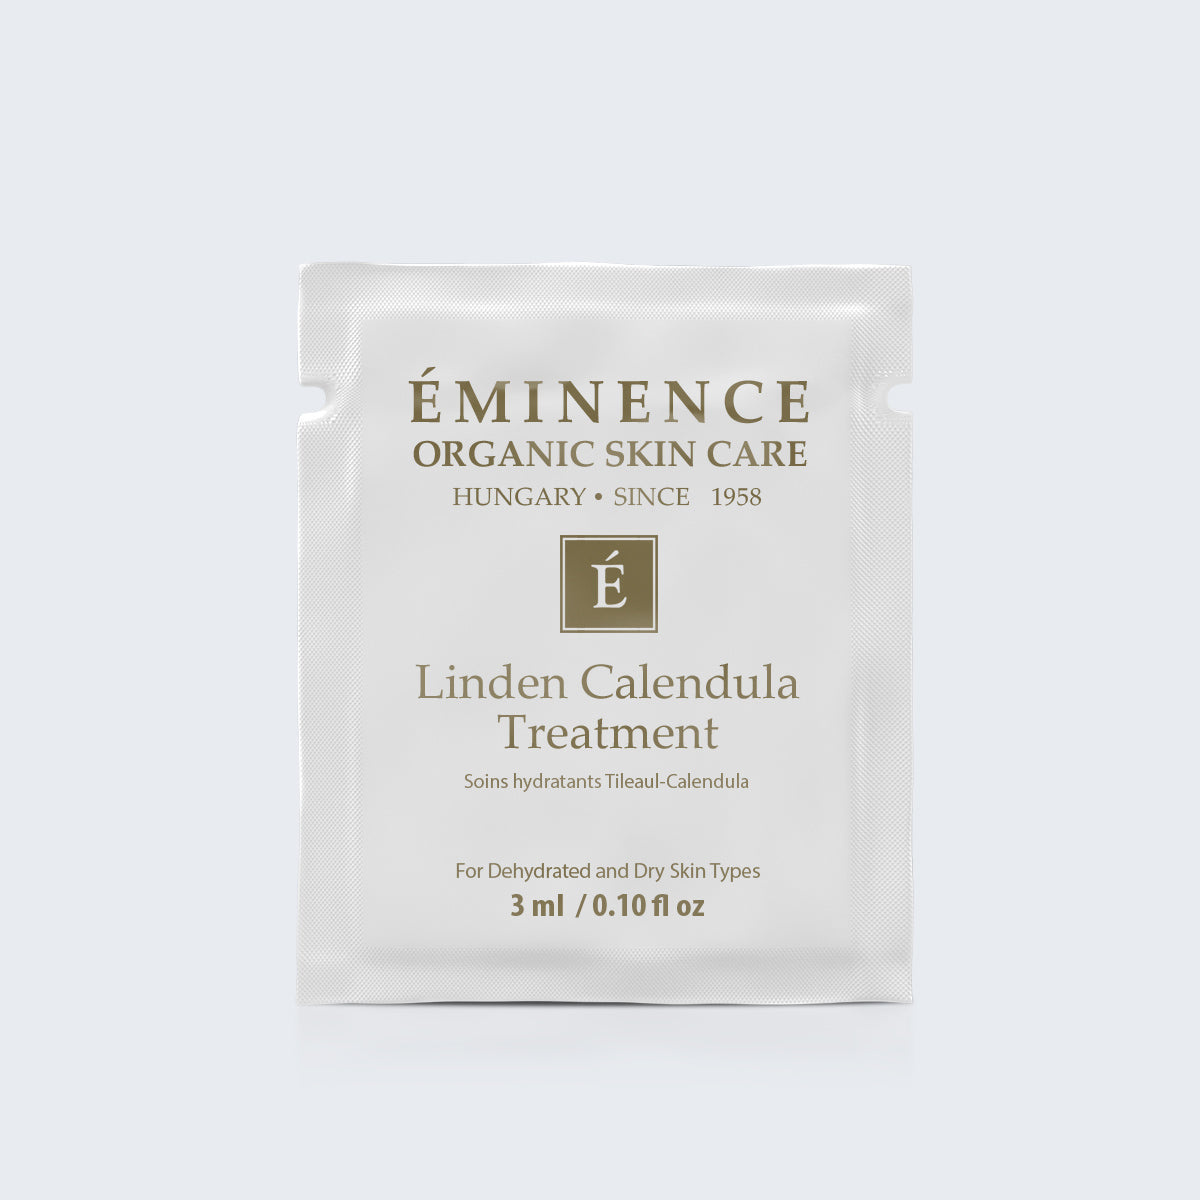 Eminence Organics Linden Calendula Treatment Card Sample